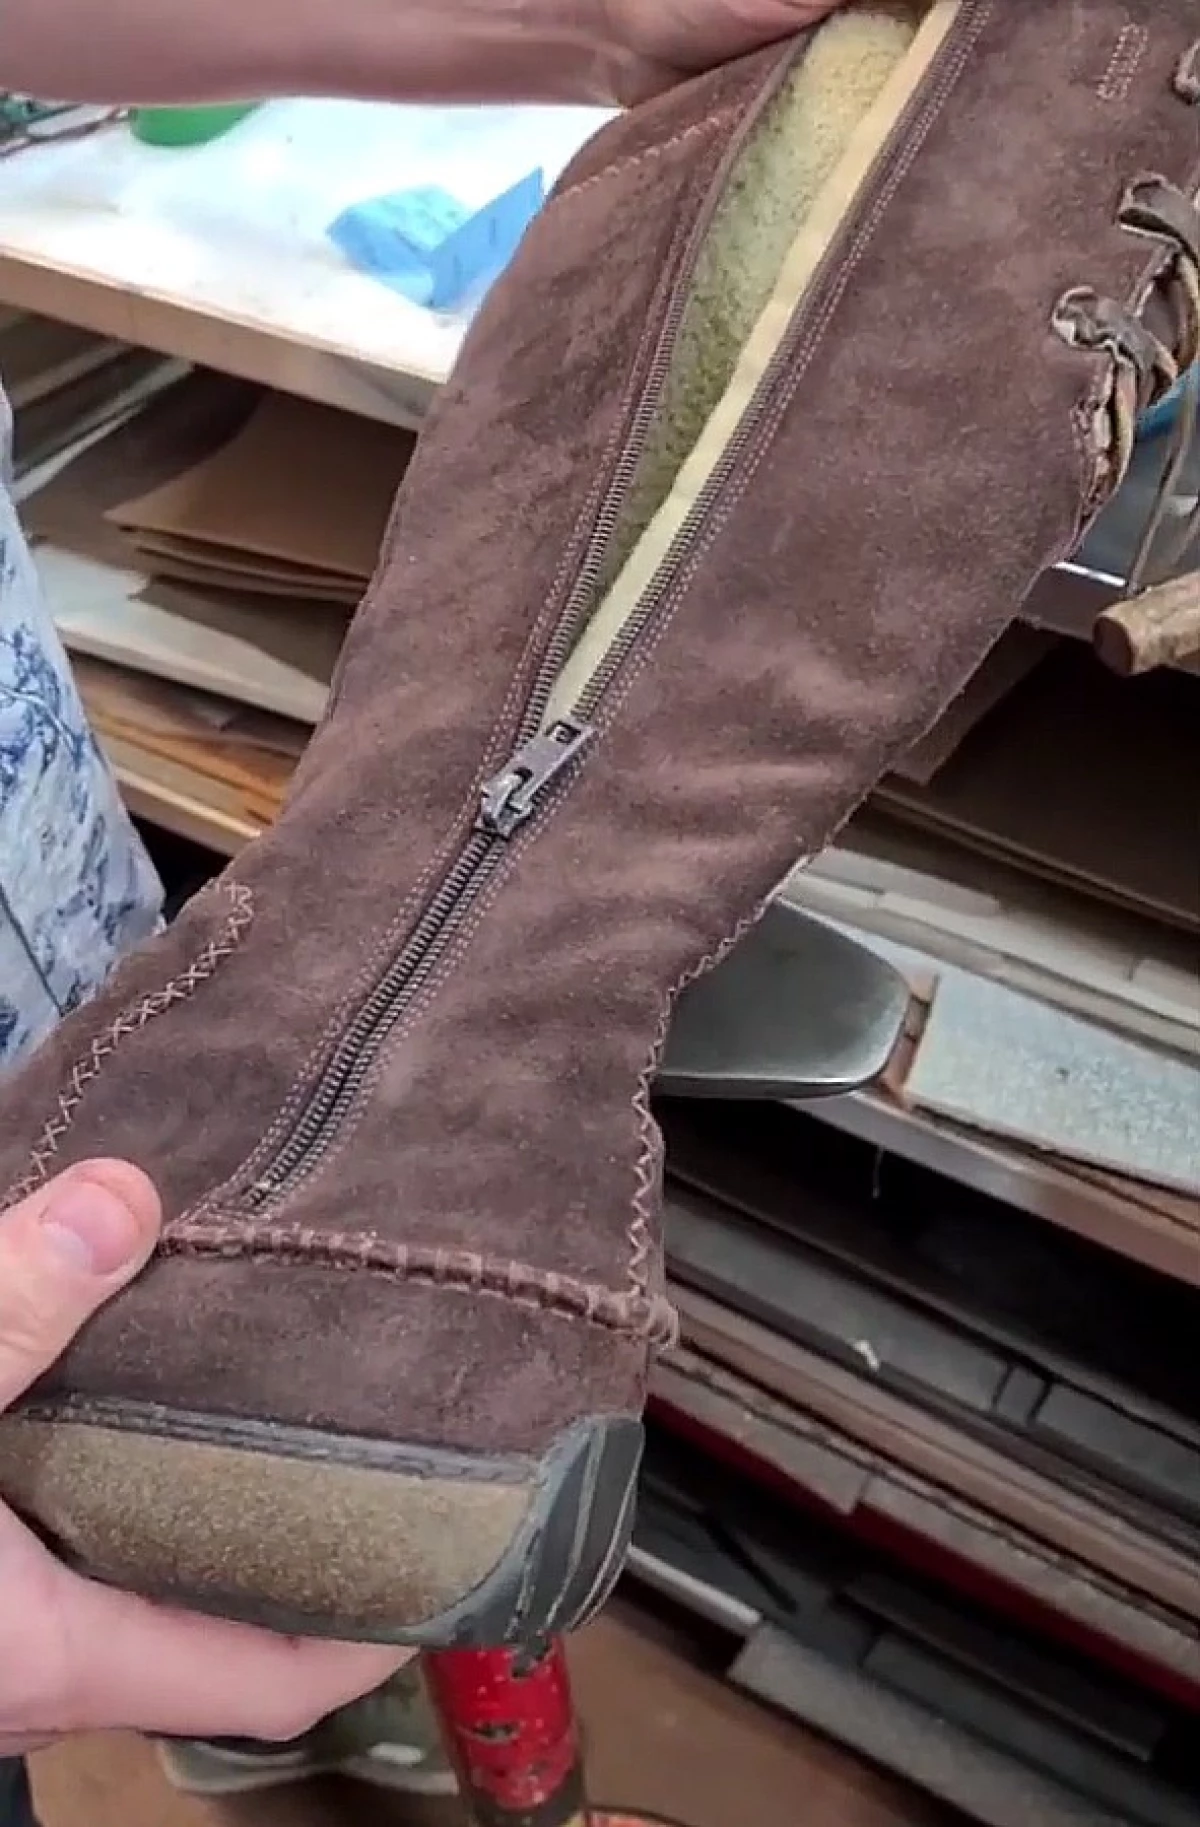 Shoemaker သည်မတူကွဲပြားသော zipper ကိုမည်သို့ဖြေရှင်းရမည်ကိုပြသခဲ့သည်။ ၎င်းသည်ပုံရသည်ထက်ပိုမိုလွယ်ကူသည် 545_1